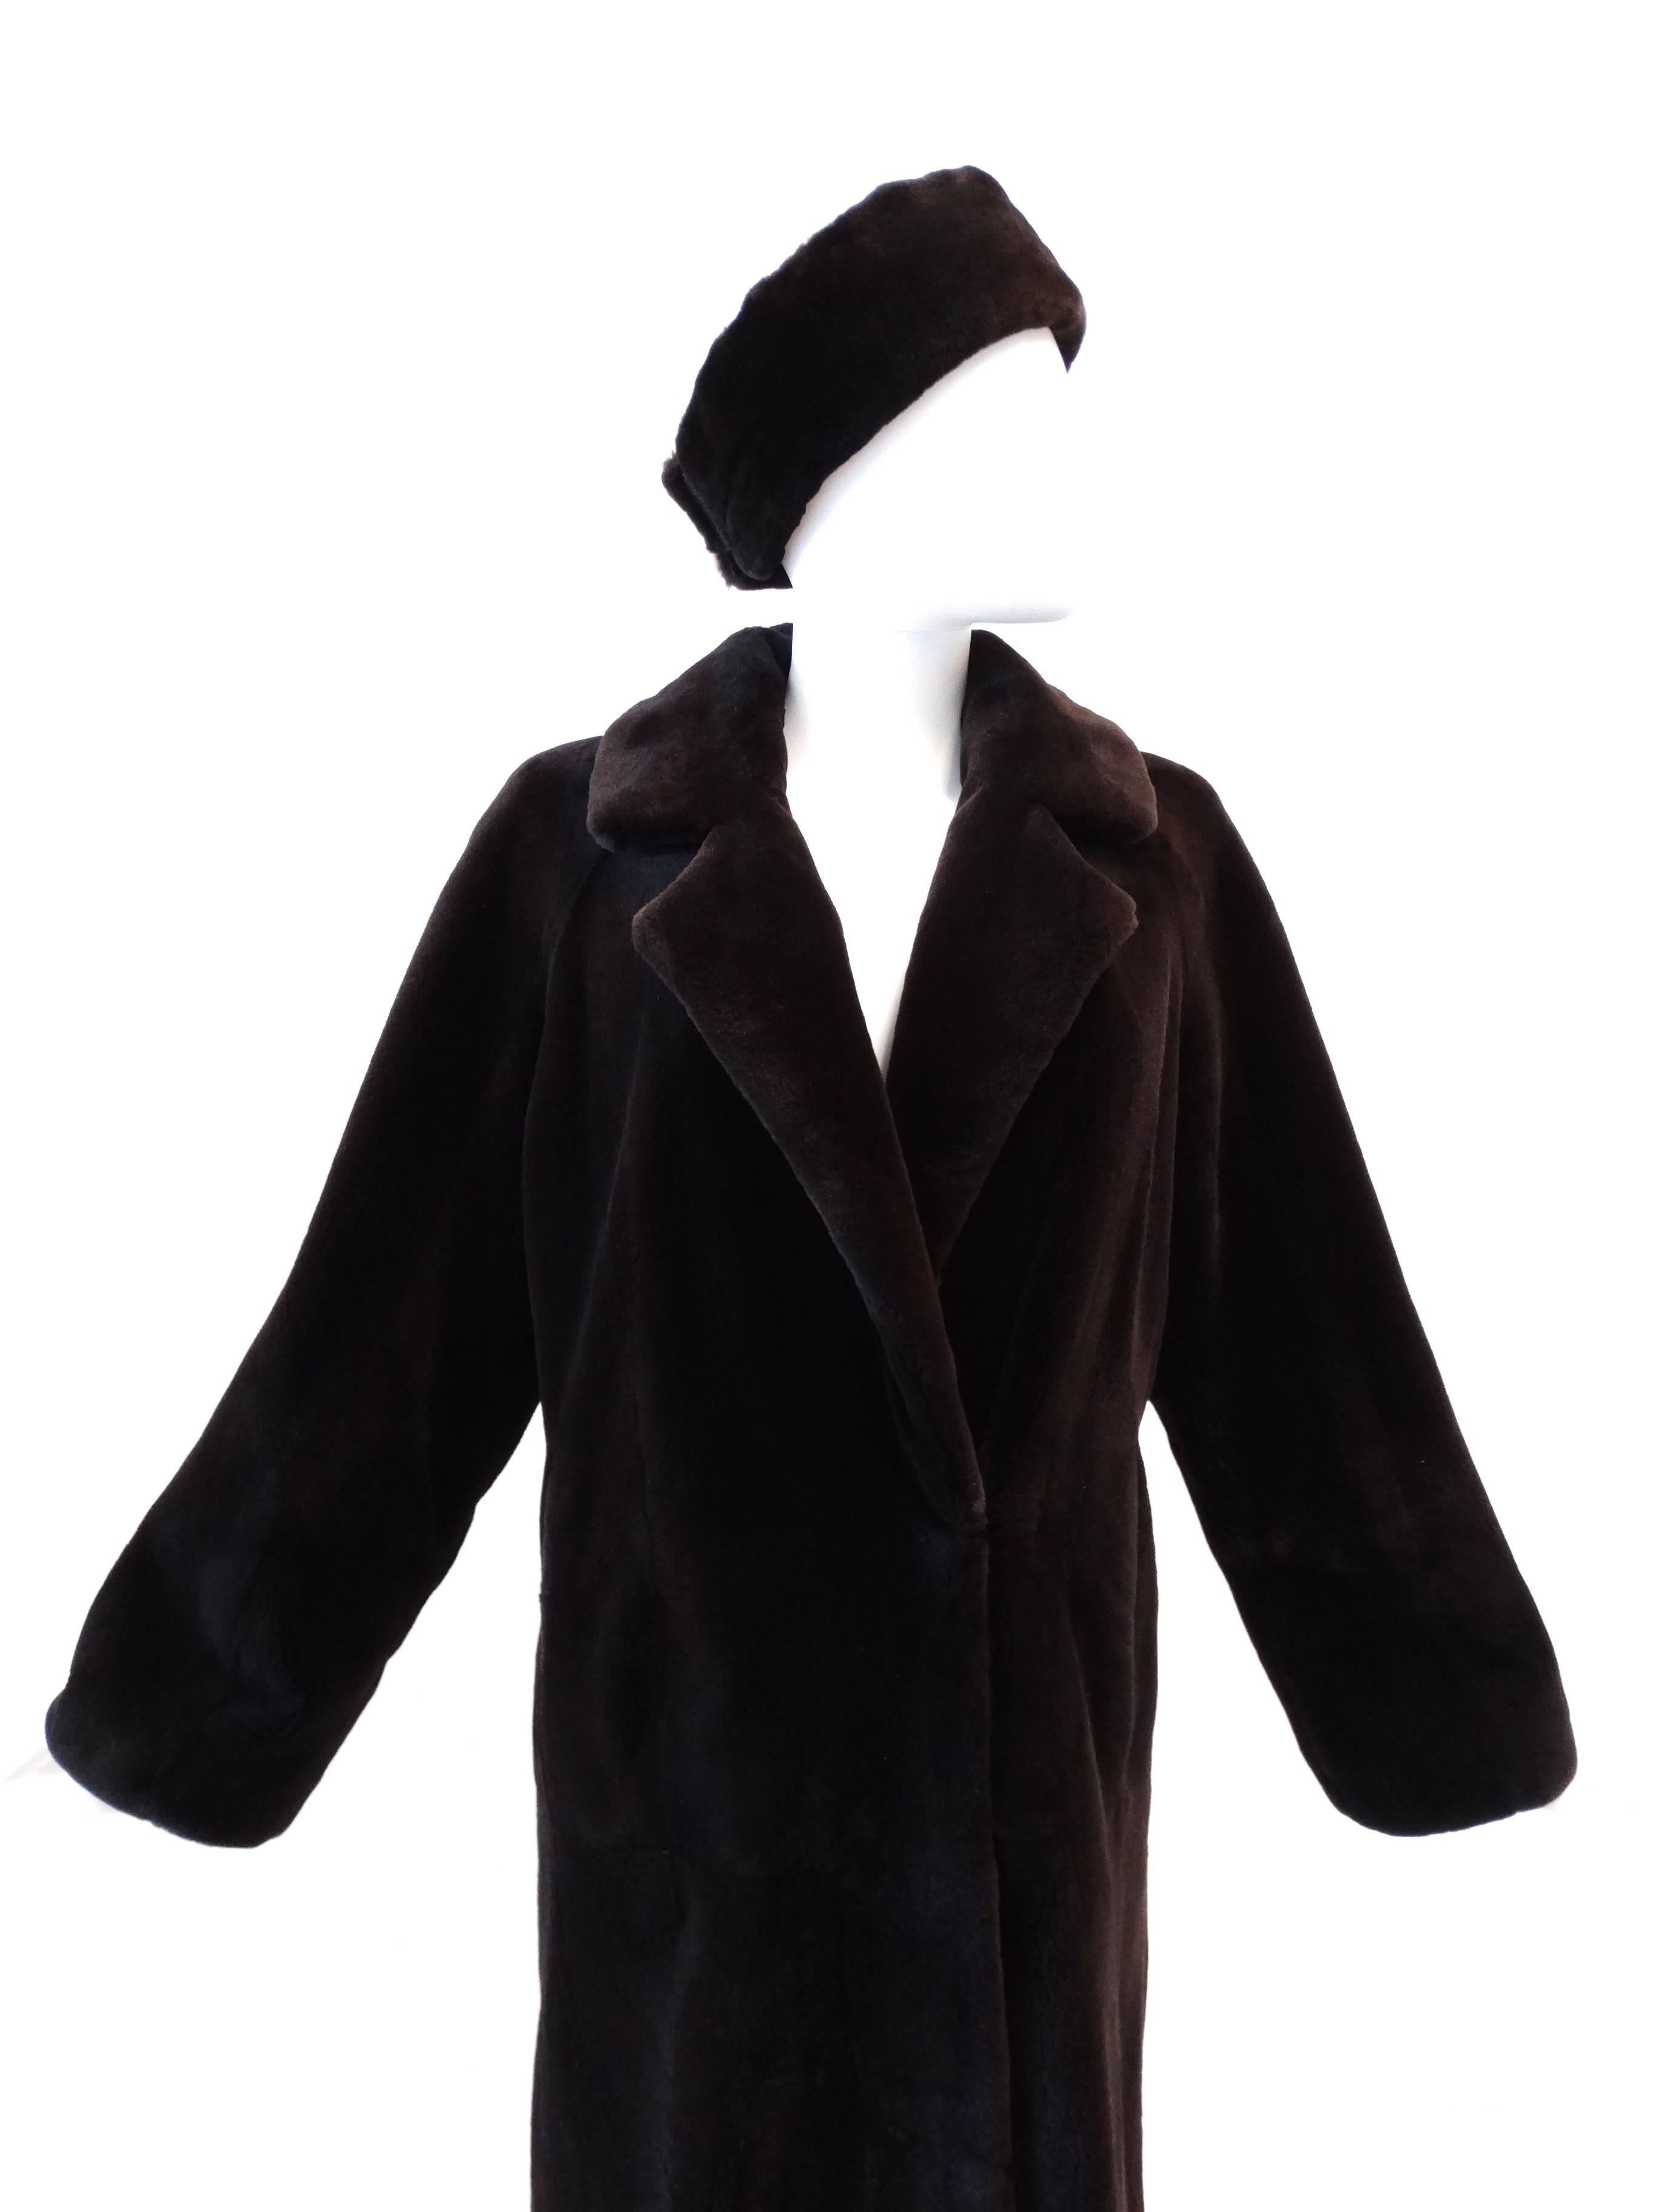 Michael Kors Full Length Sheared Mink Coat with Headwrap 1